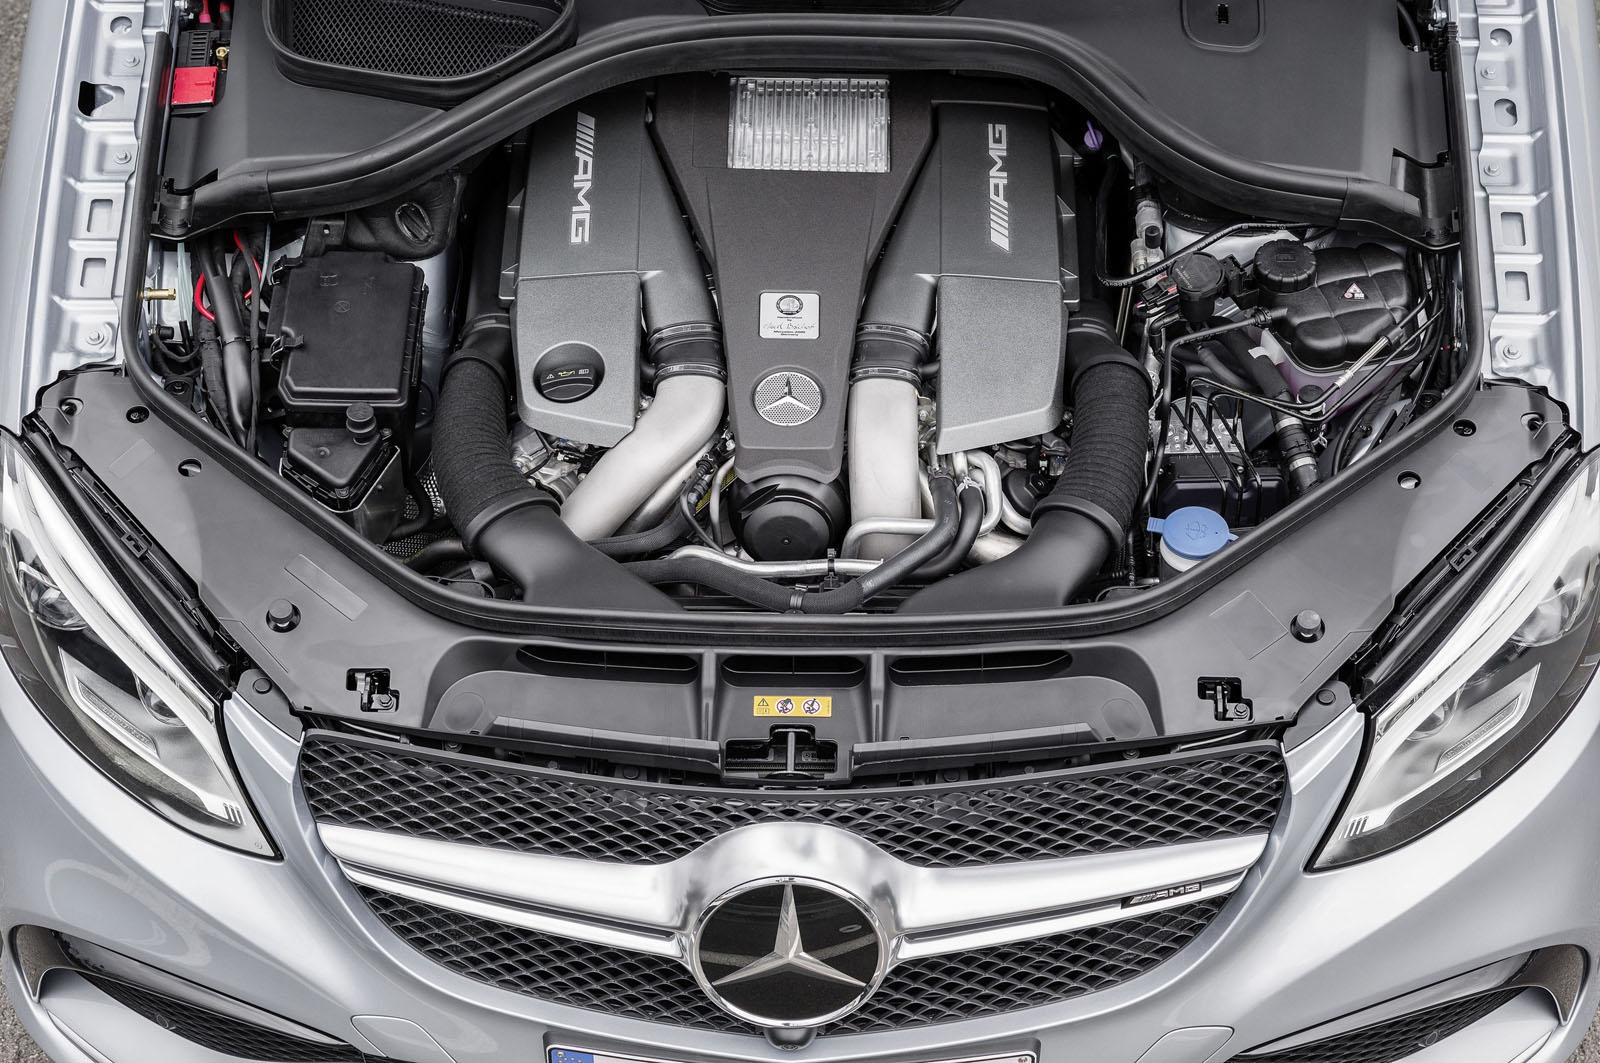 2015 Mercedes AMG GLE63 S Coupe engine bay